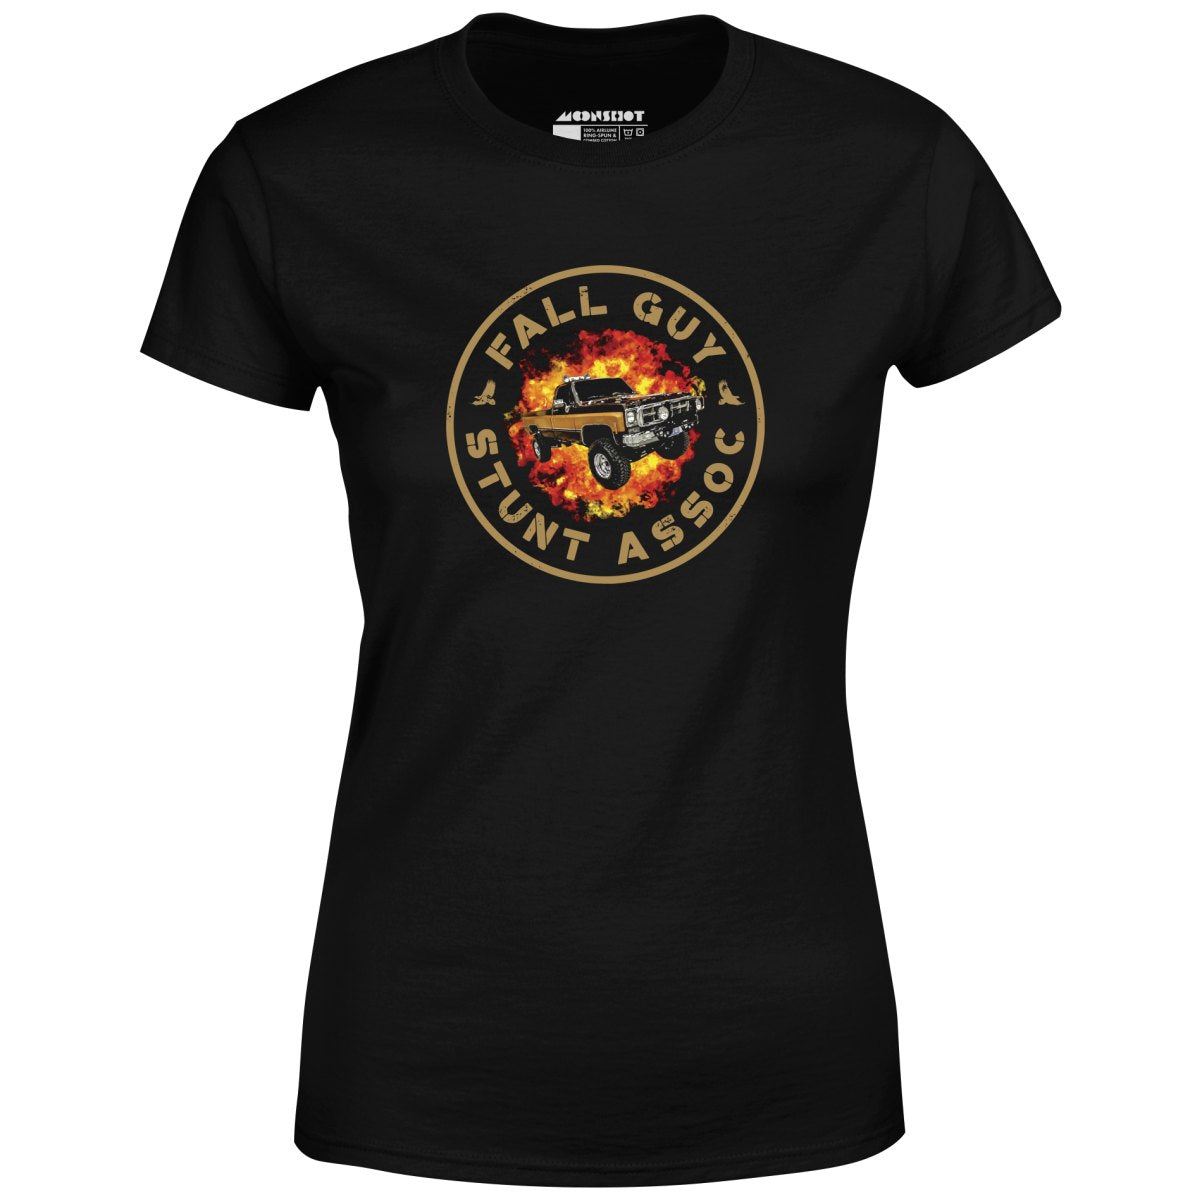 Fall Guy Stunt Association - Women's T-Shirt